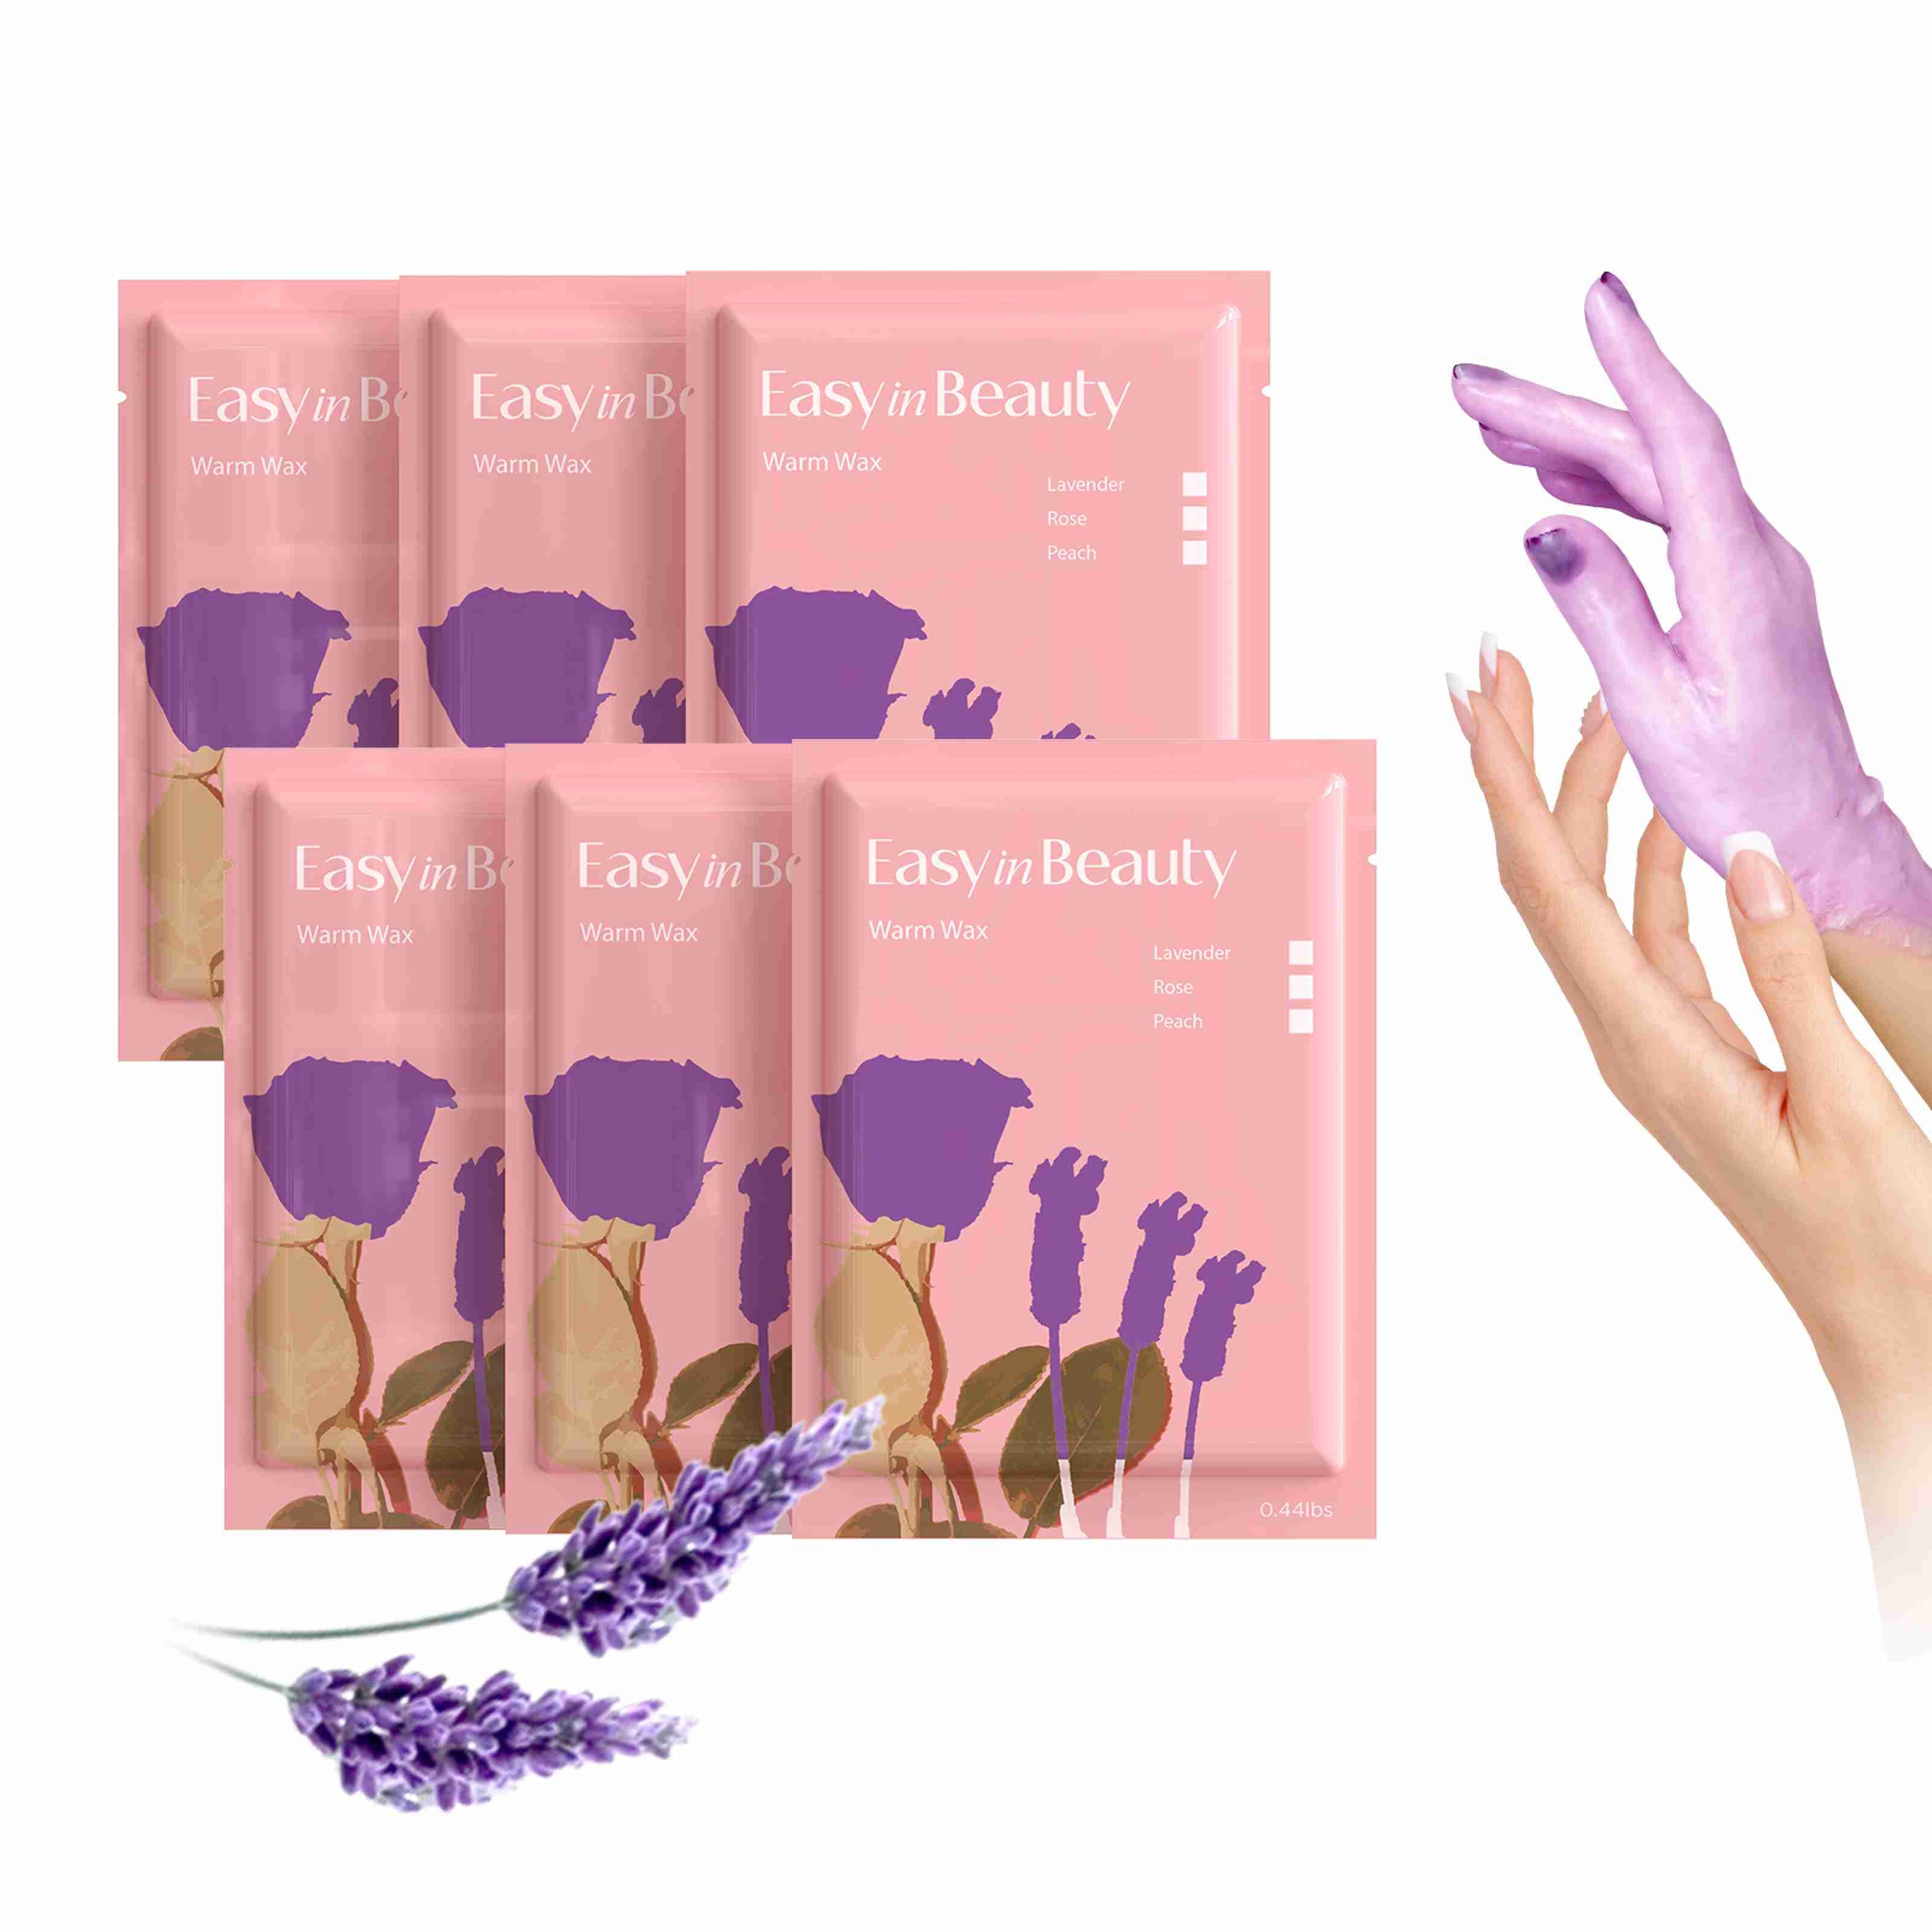 Paraffin Wax Refill - Rose & Lavender